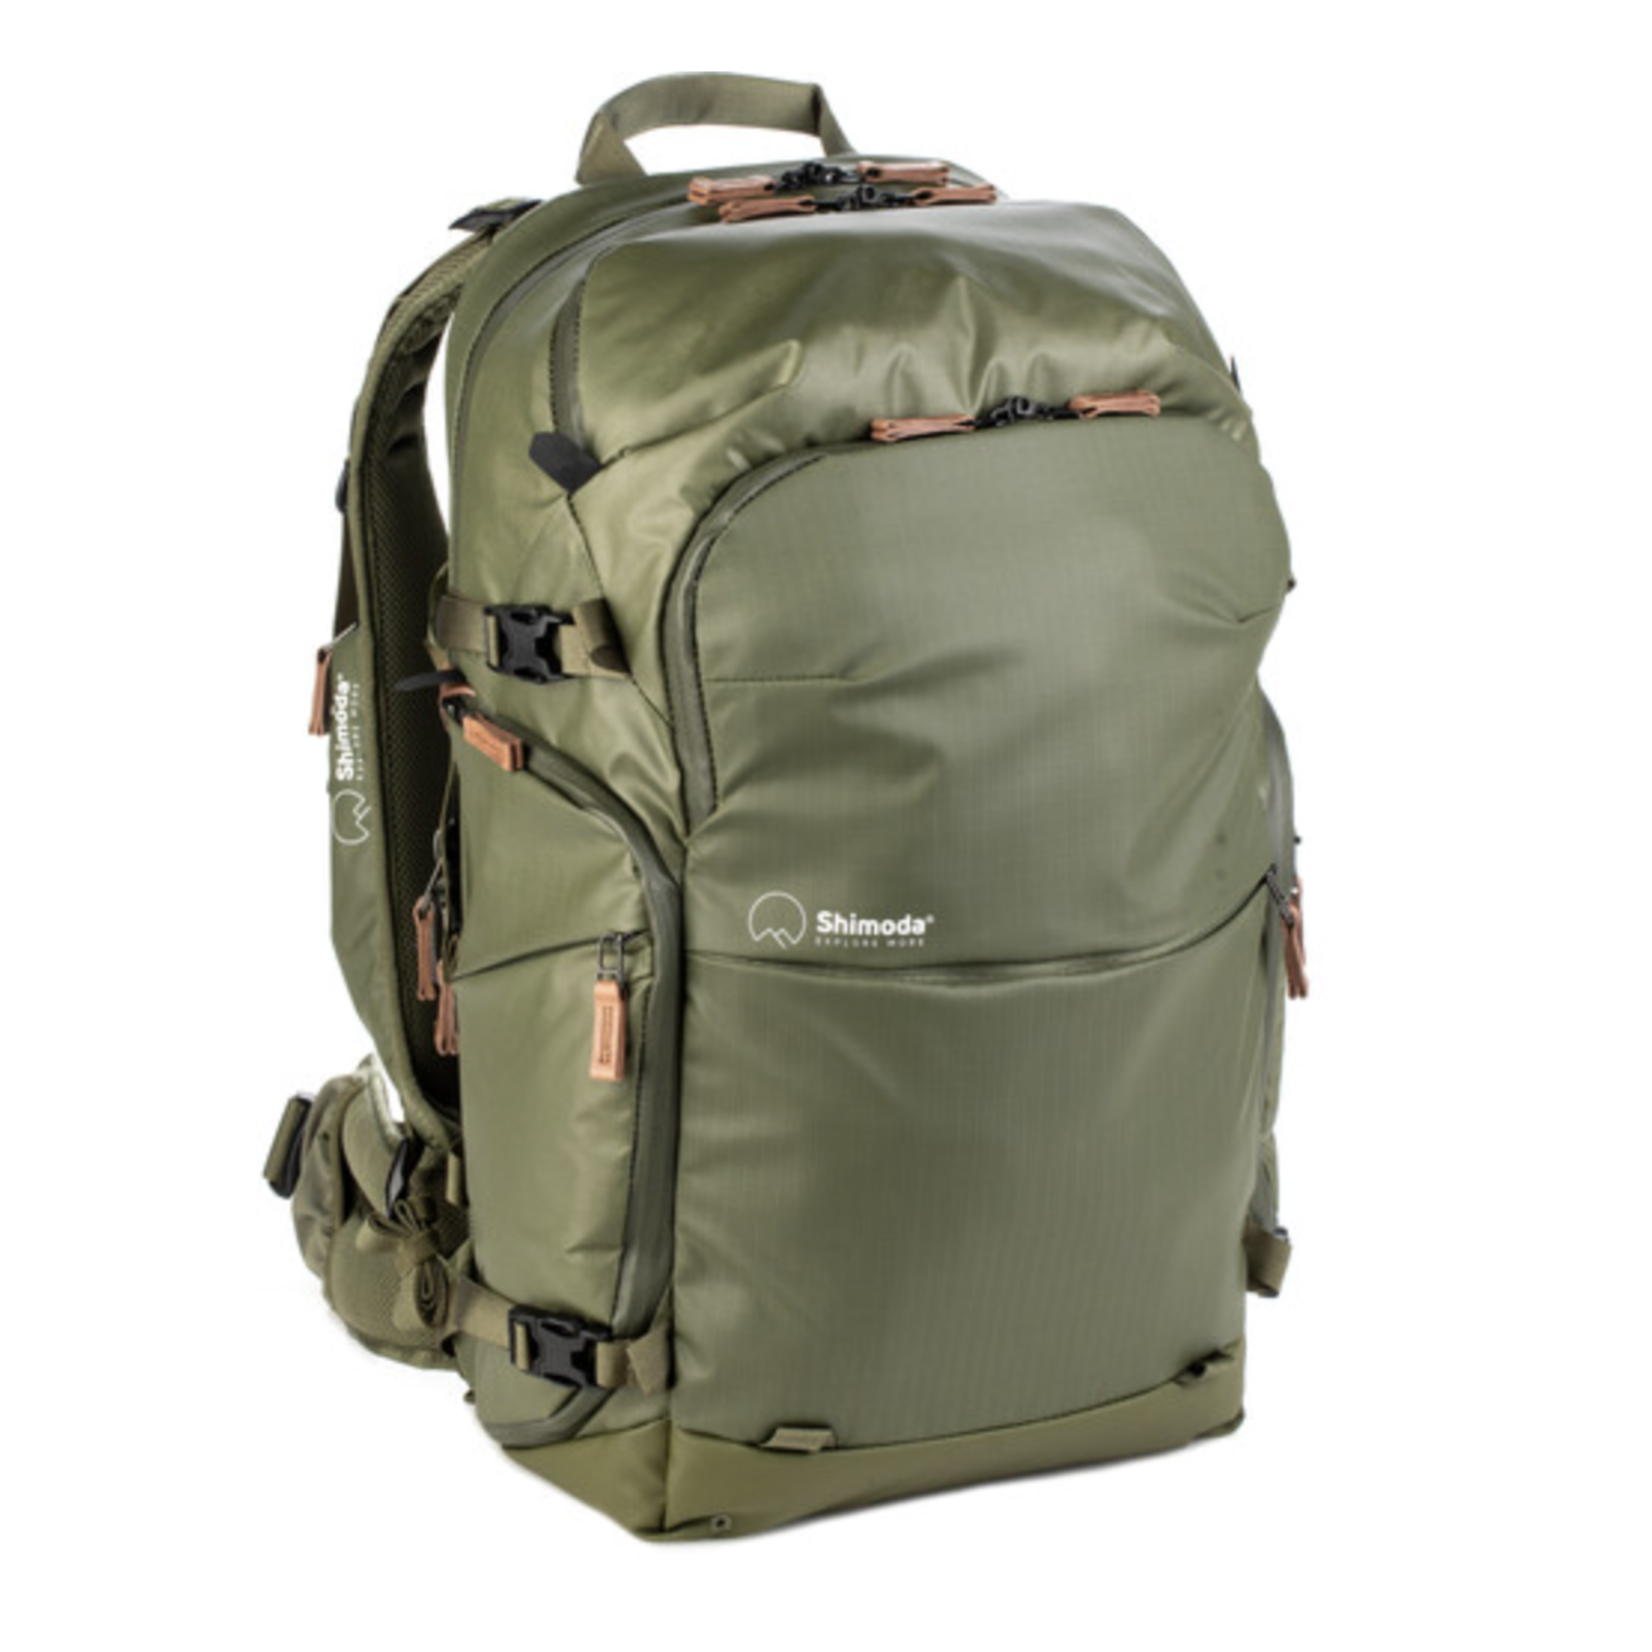 Shimoda Shimoda Designs Explore v2 30 Backpack Photo Starter Kit (Army Green)